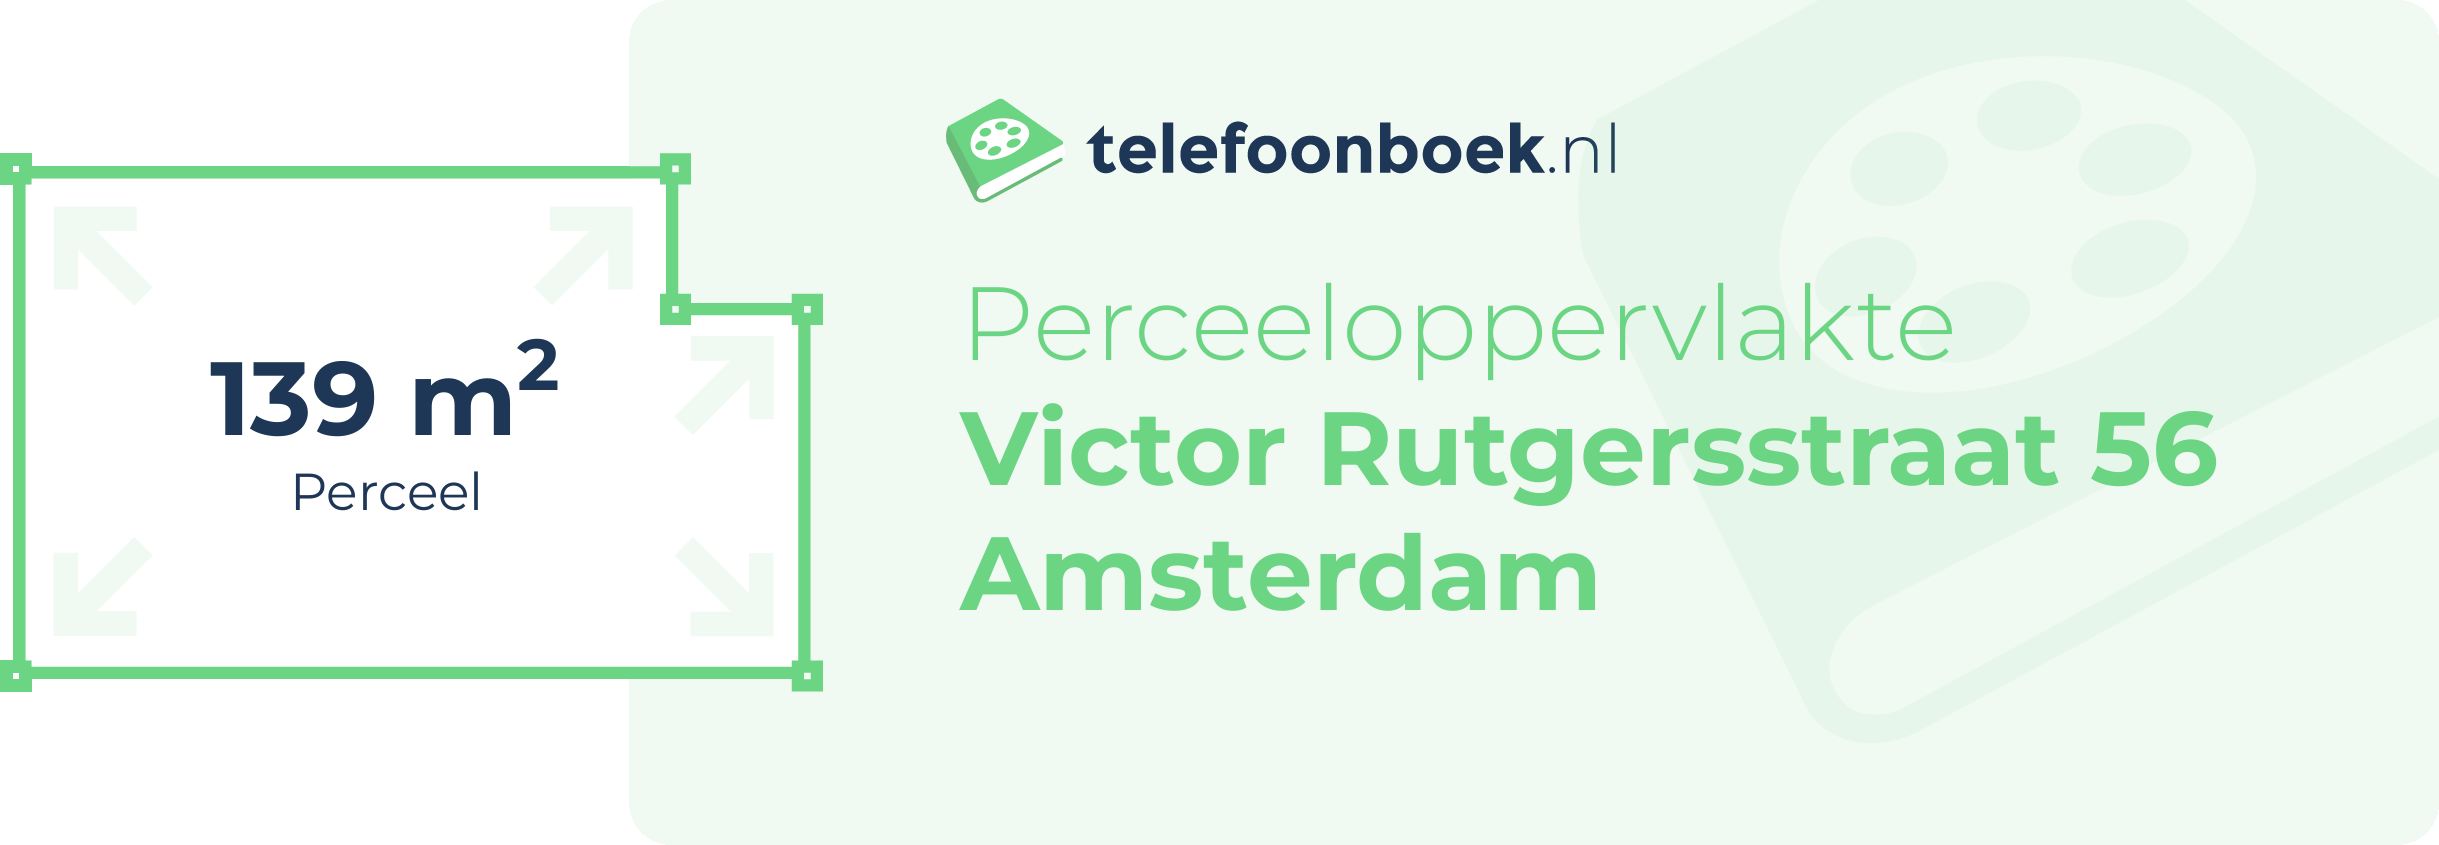 Perceeloppervlakte Victor Rutgersstraat 56 Amsterdam